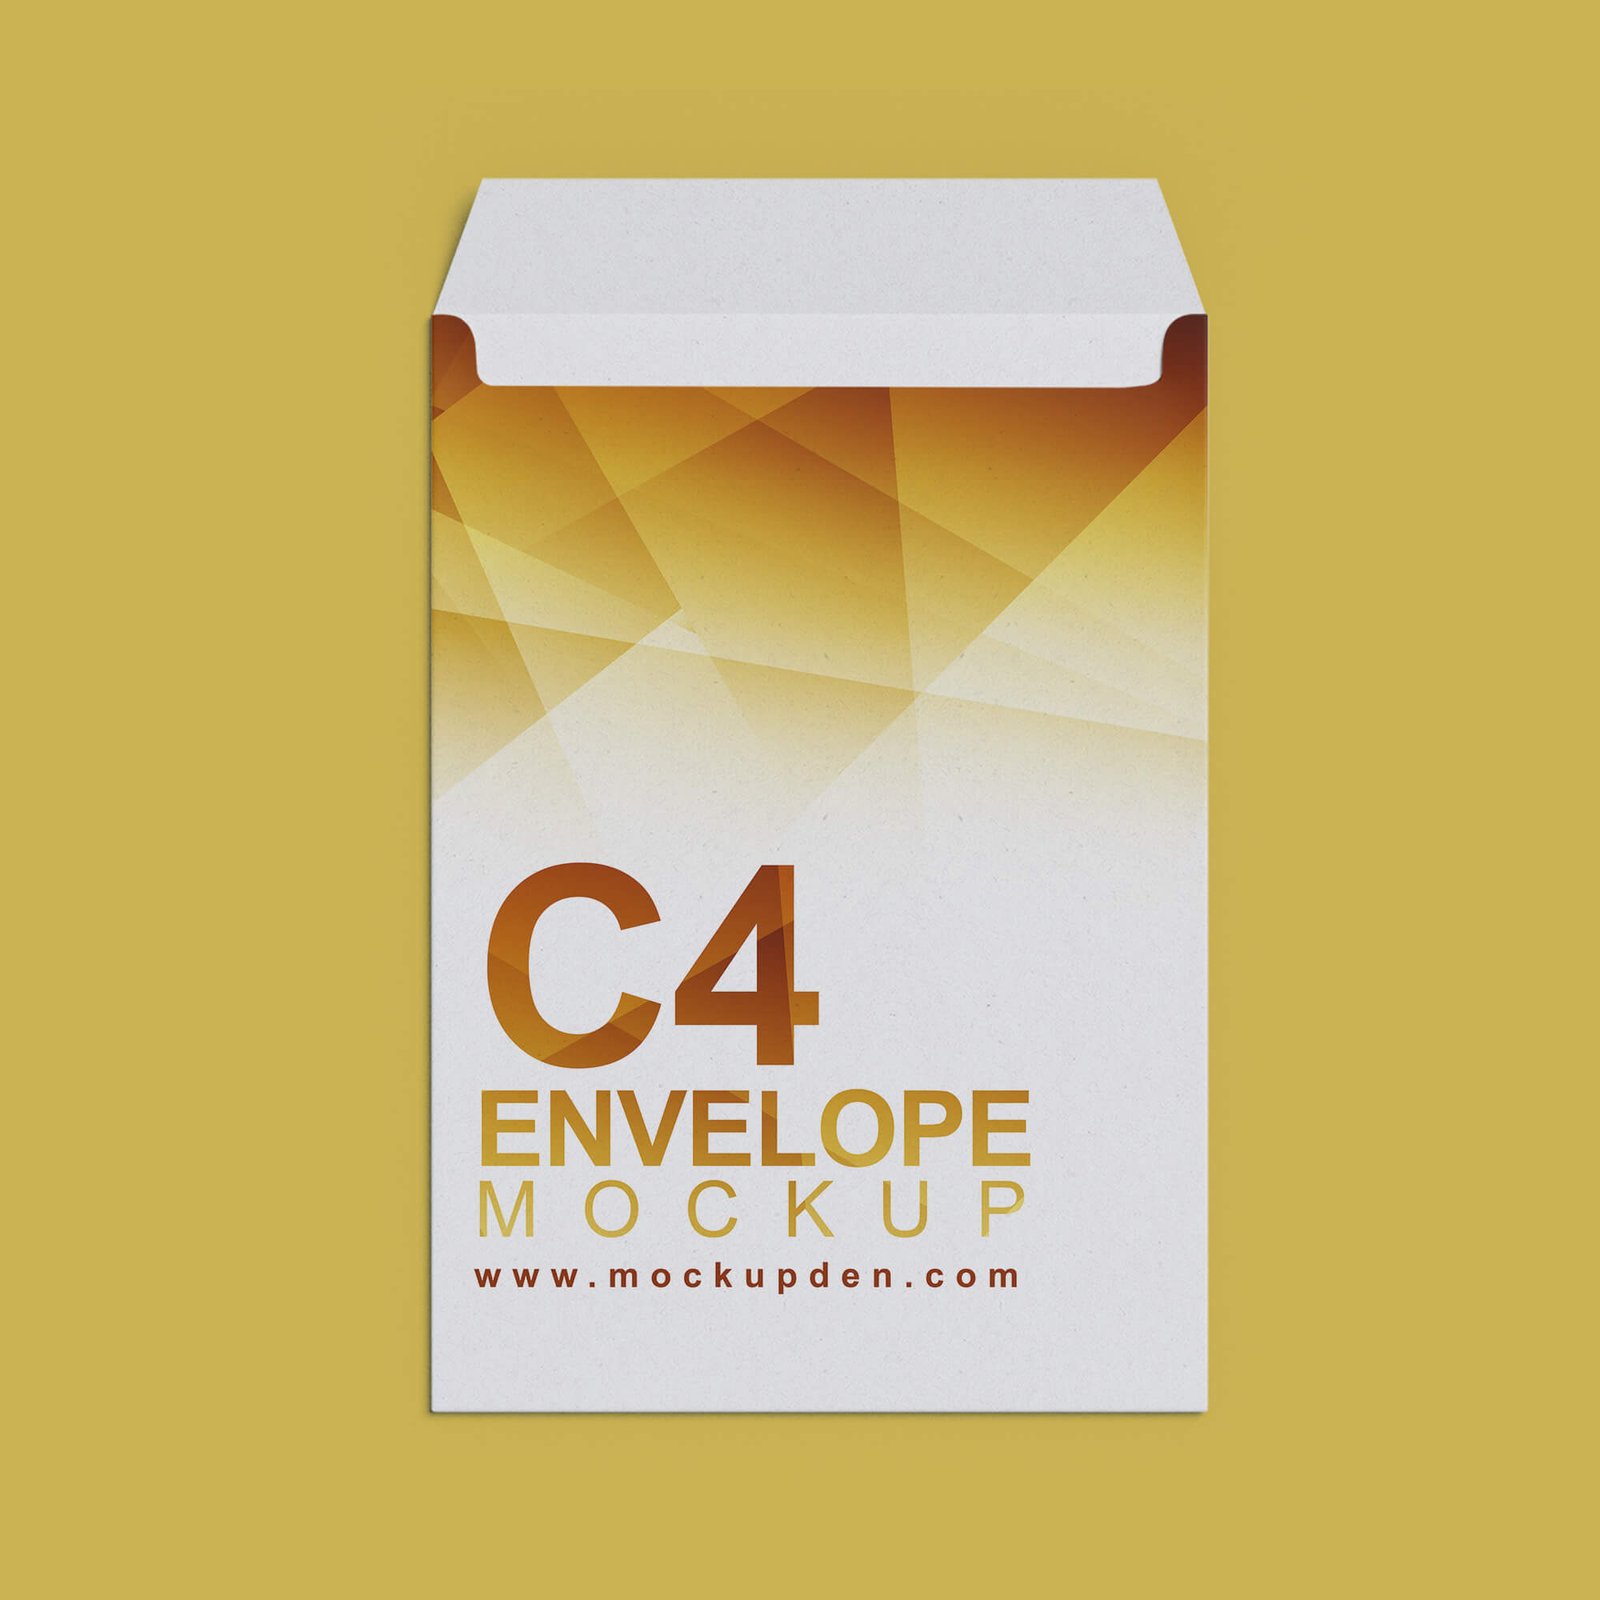 Design Free C4 Envelope Mockup PSD Template